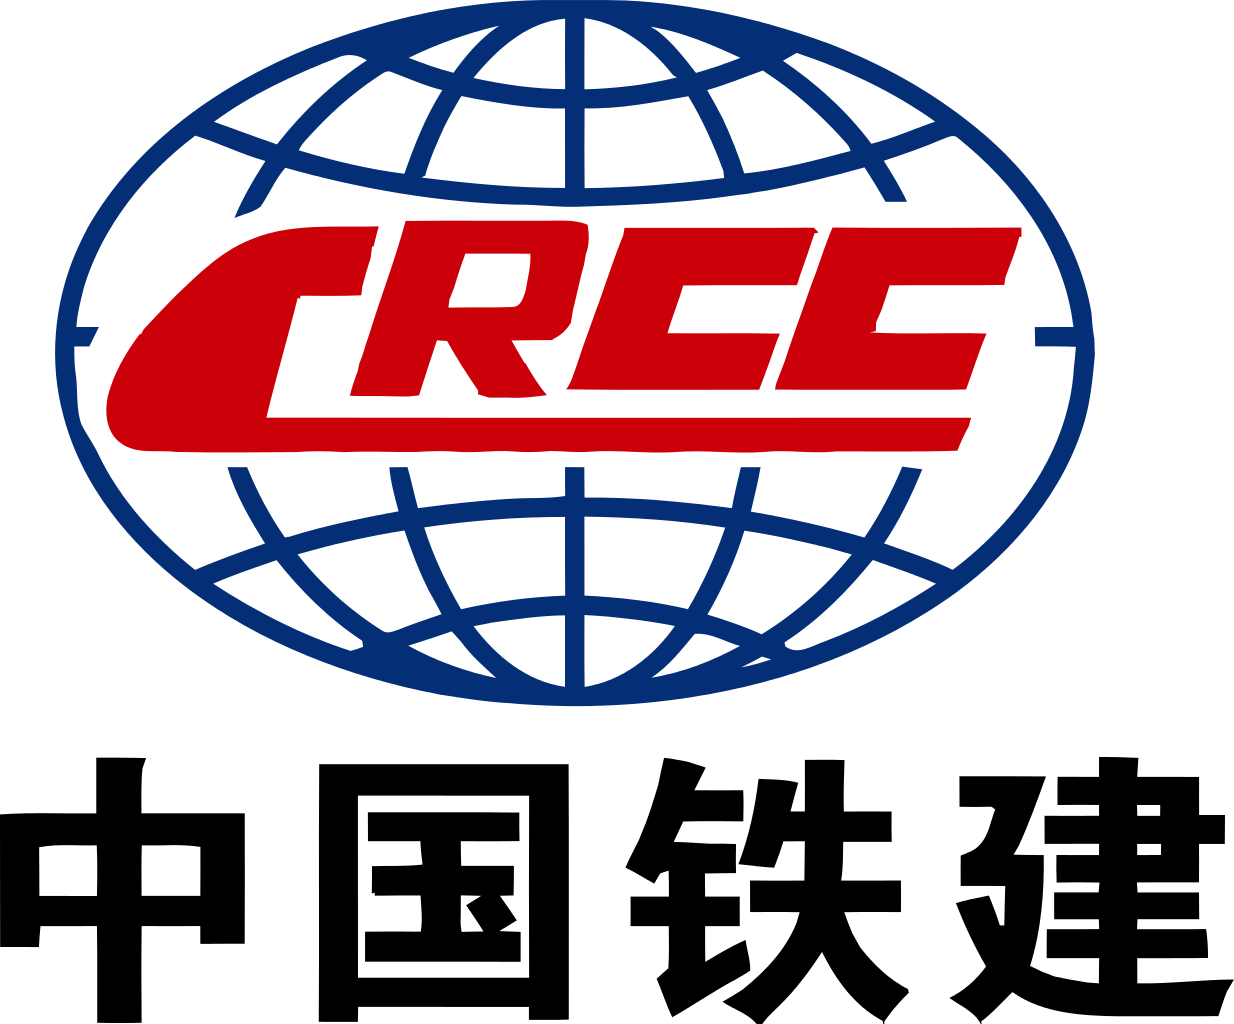 CRCC Brand Logo